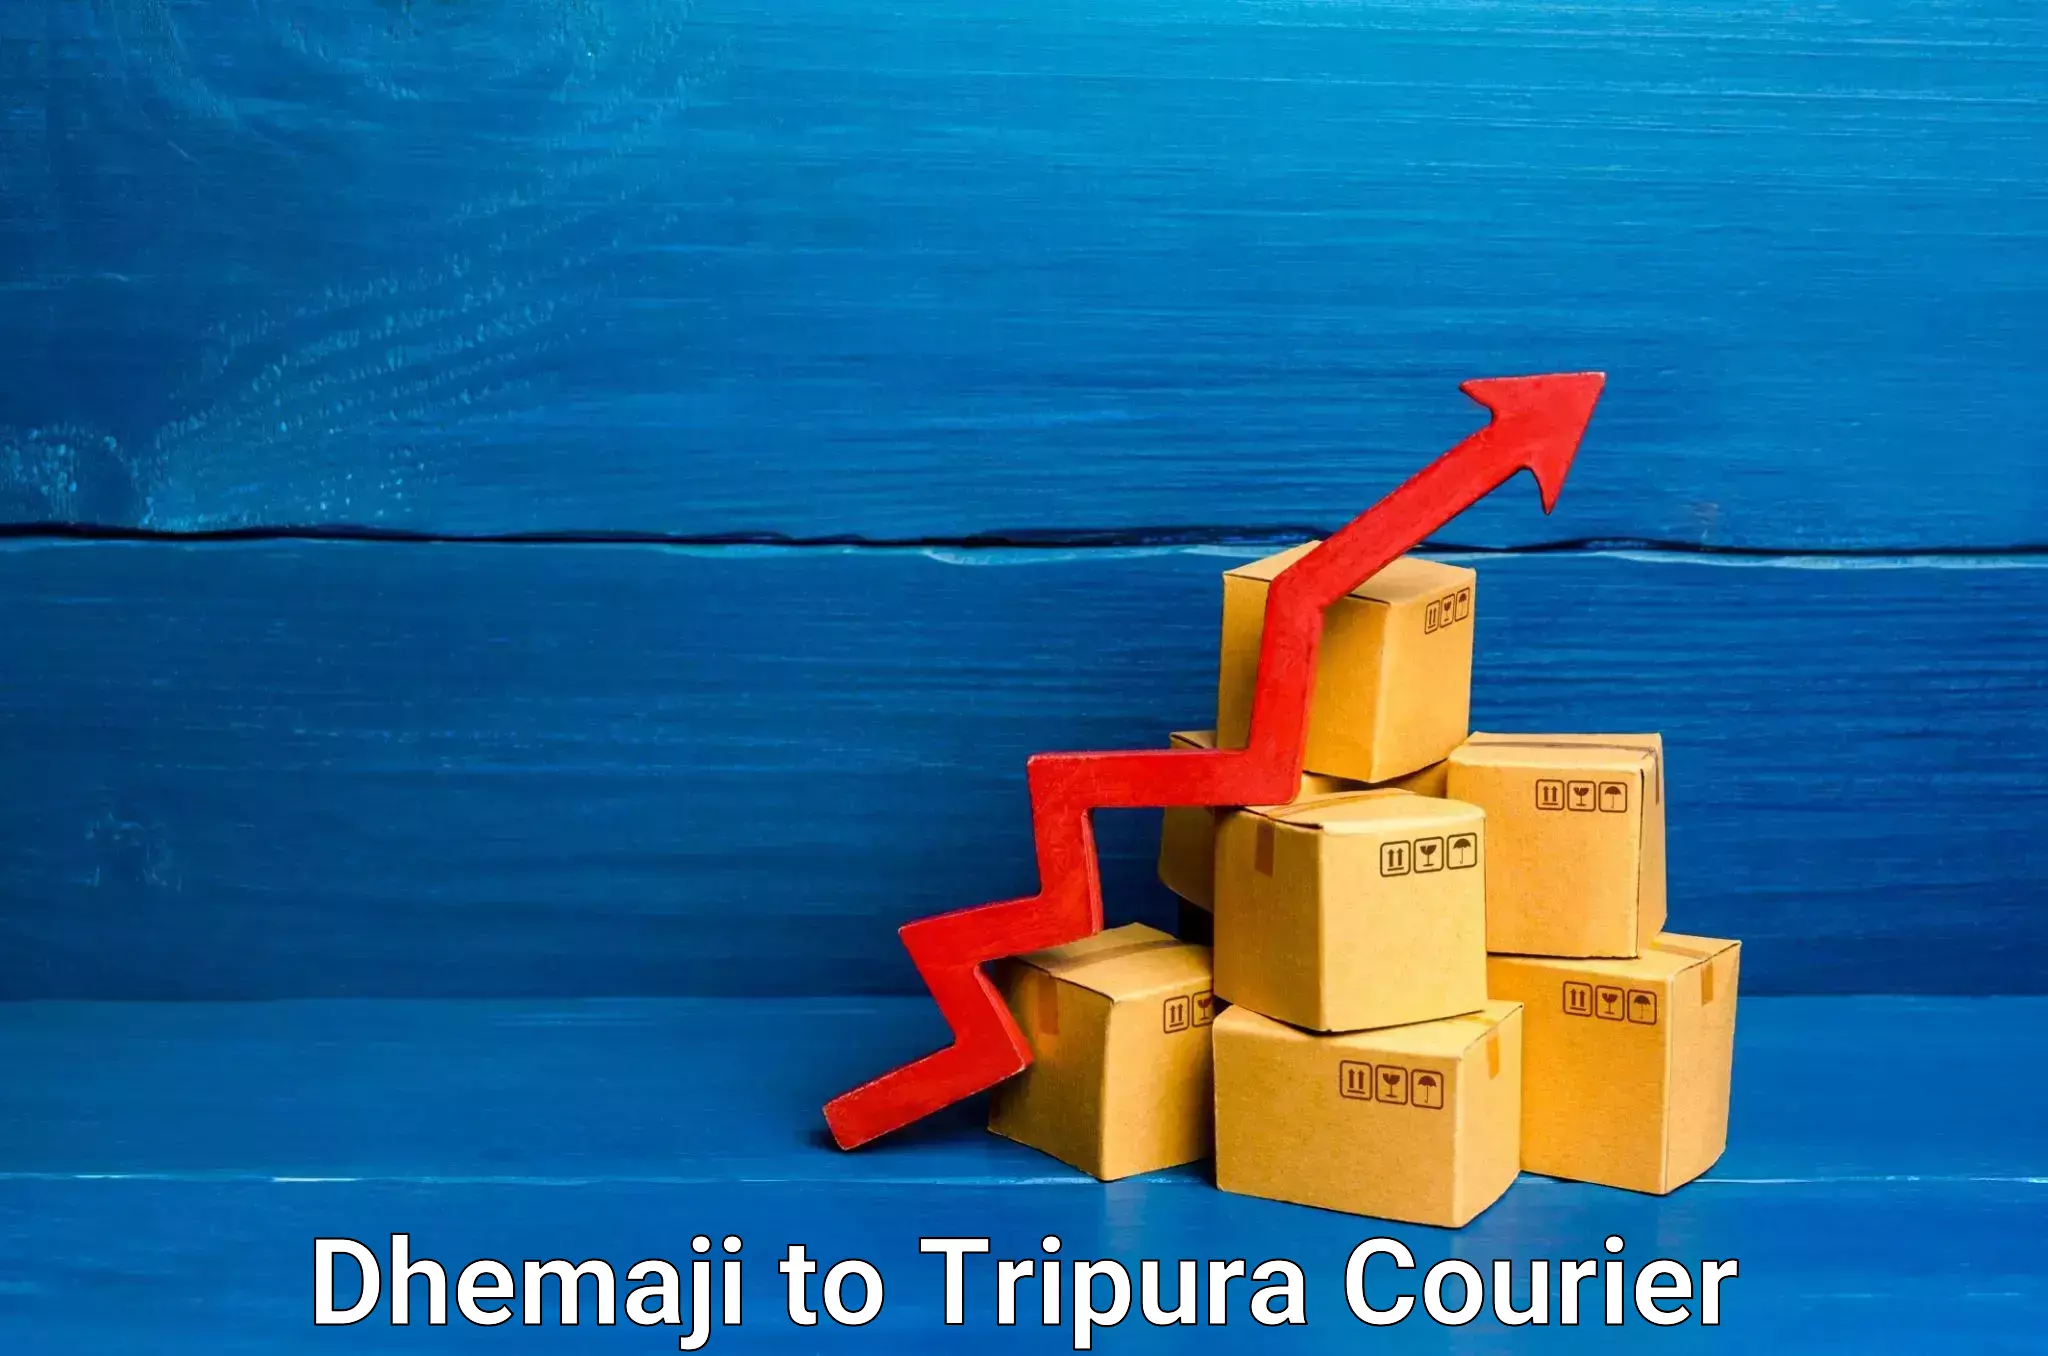 On-demand shipping options Dhemaji to Udaipur Tripura